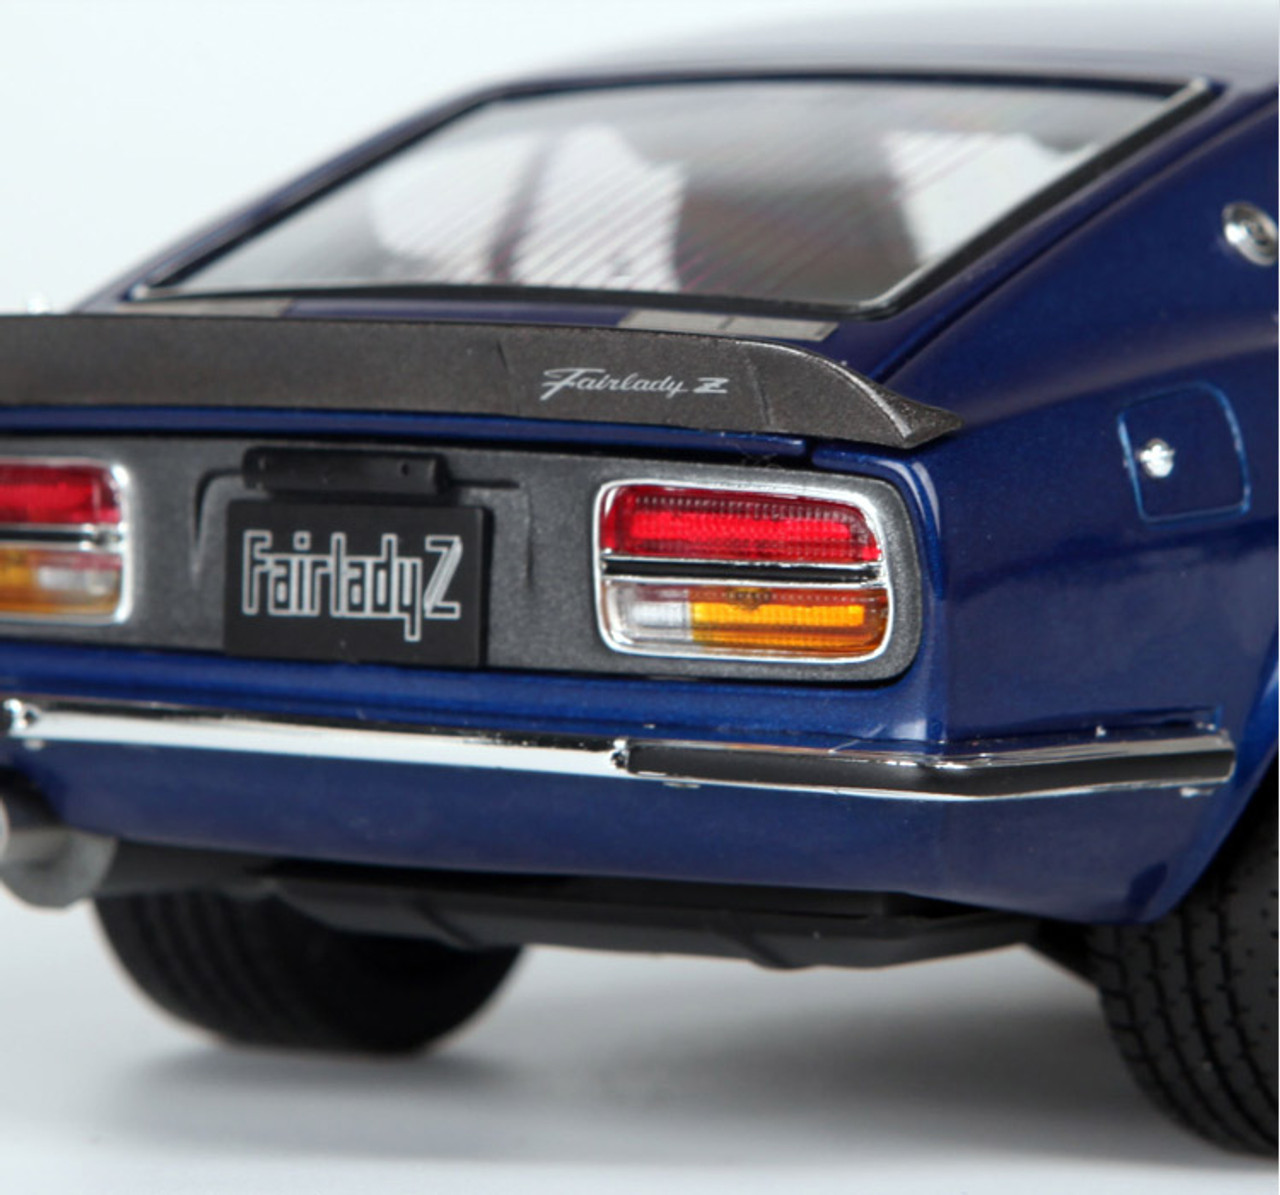 1/18 Kyosho Nissan Fairlady Z (Blue) Diecast Car Model